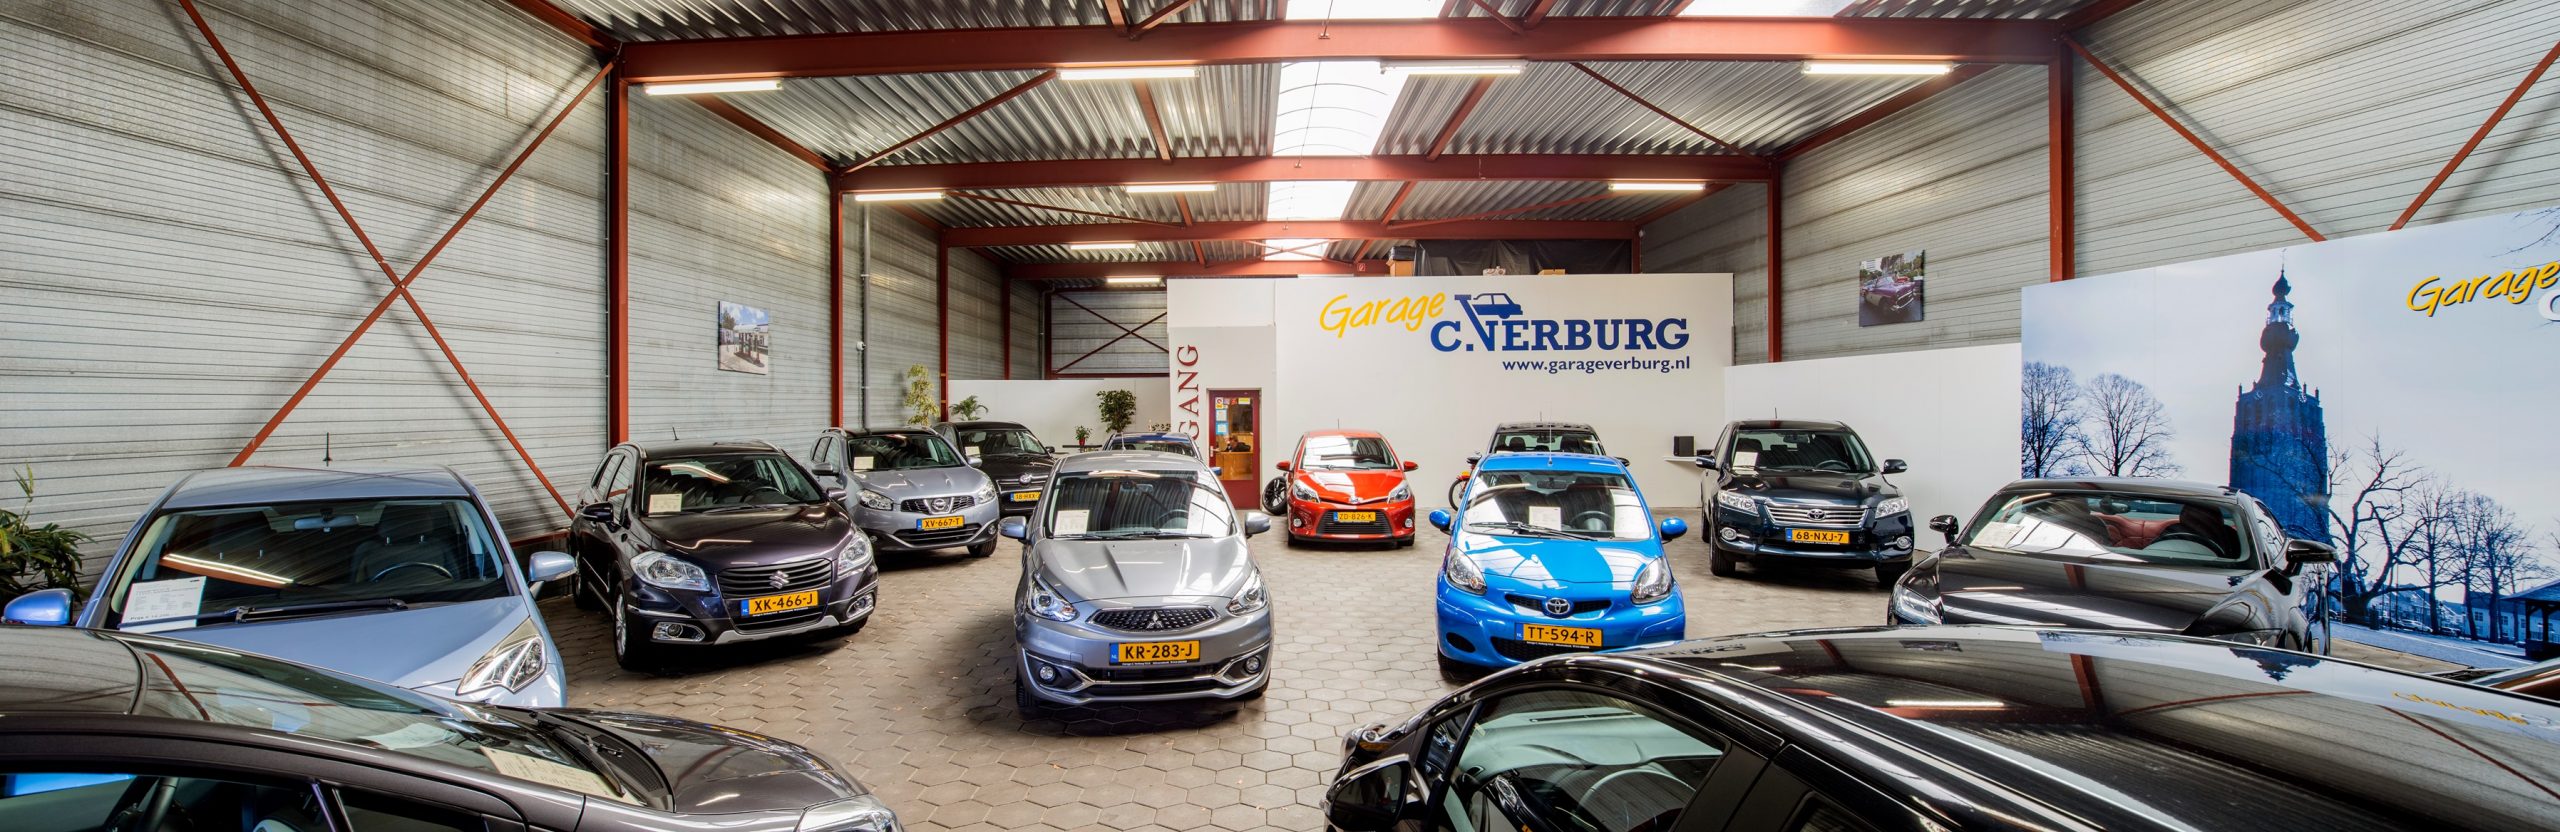 Garage C. Verburg VOF.